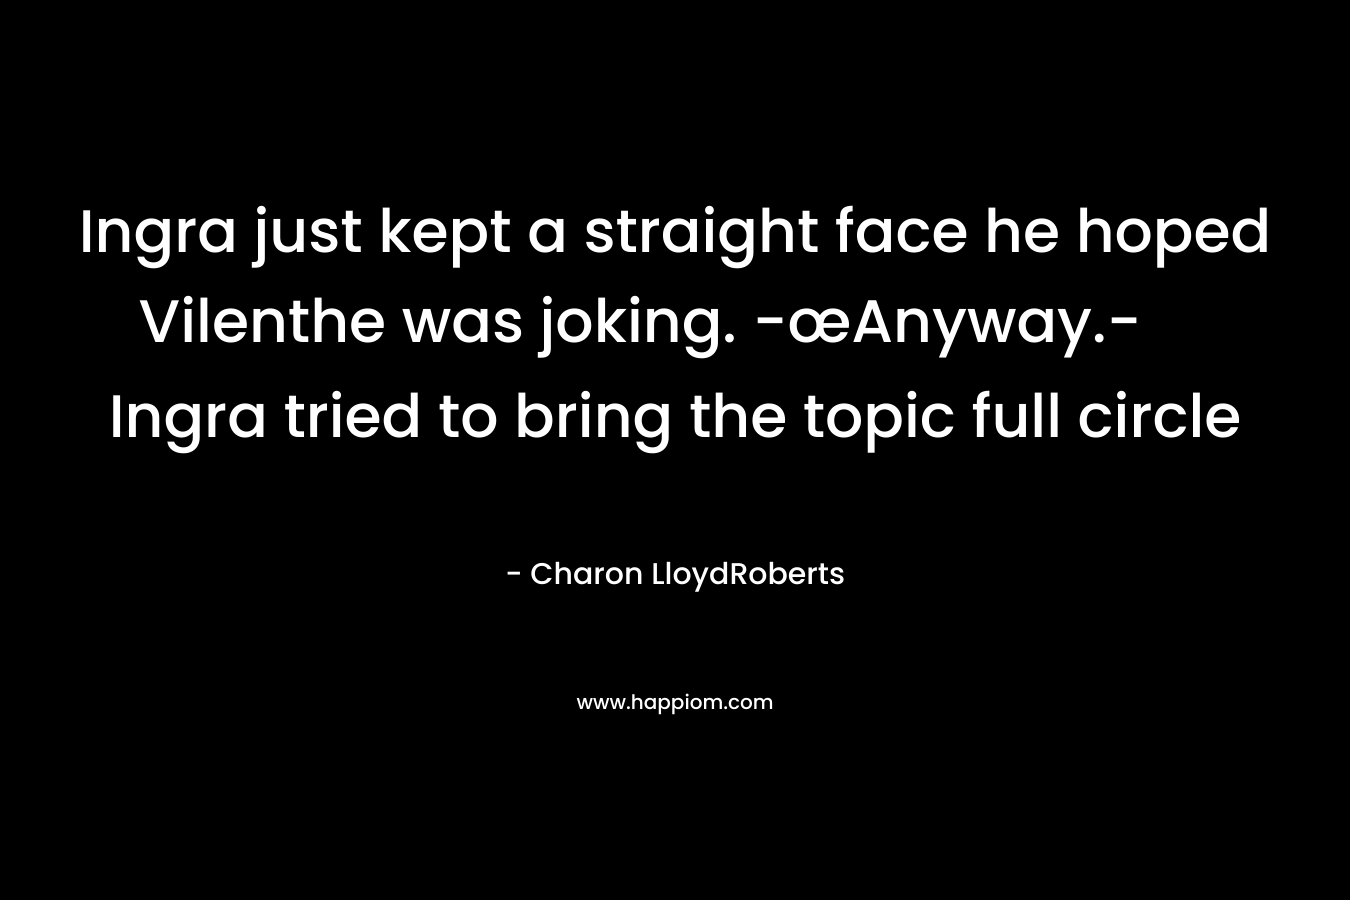 Ingra just kept a straight face he hoped Vilenthe was joking. -œAnyway.- Ingra tried to bring the topic full circle – Charon LloydRoberts